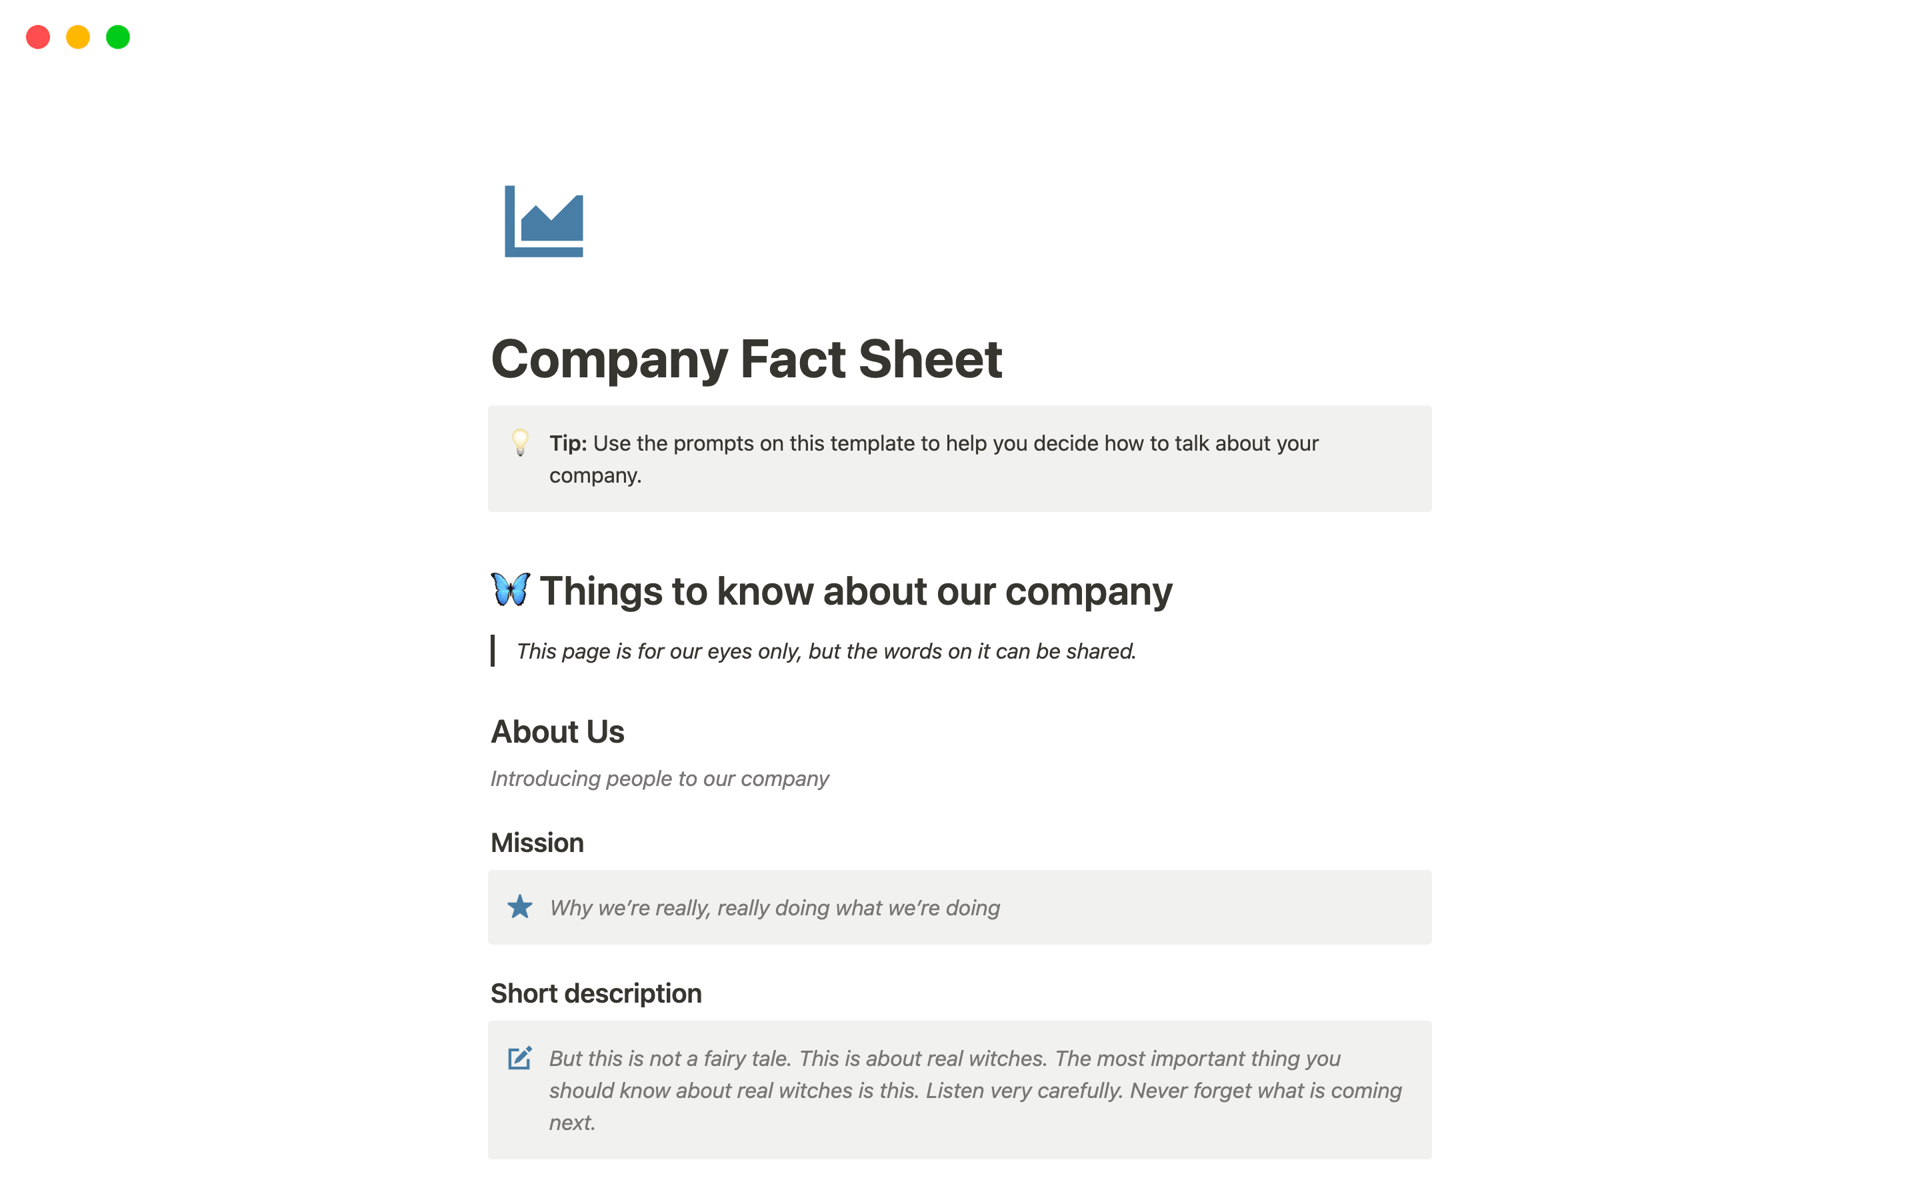 Aperçu du modèle de Company Fact Sheet